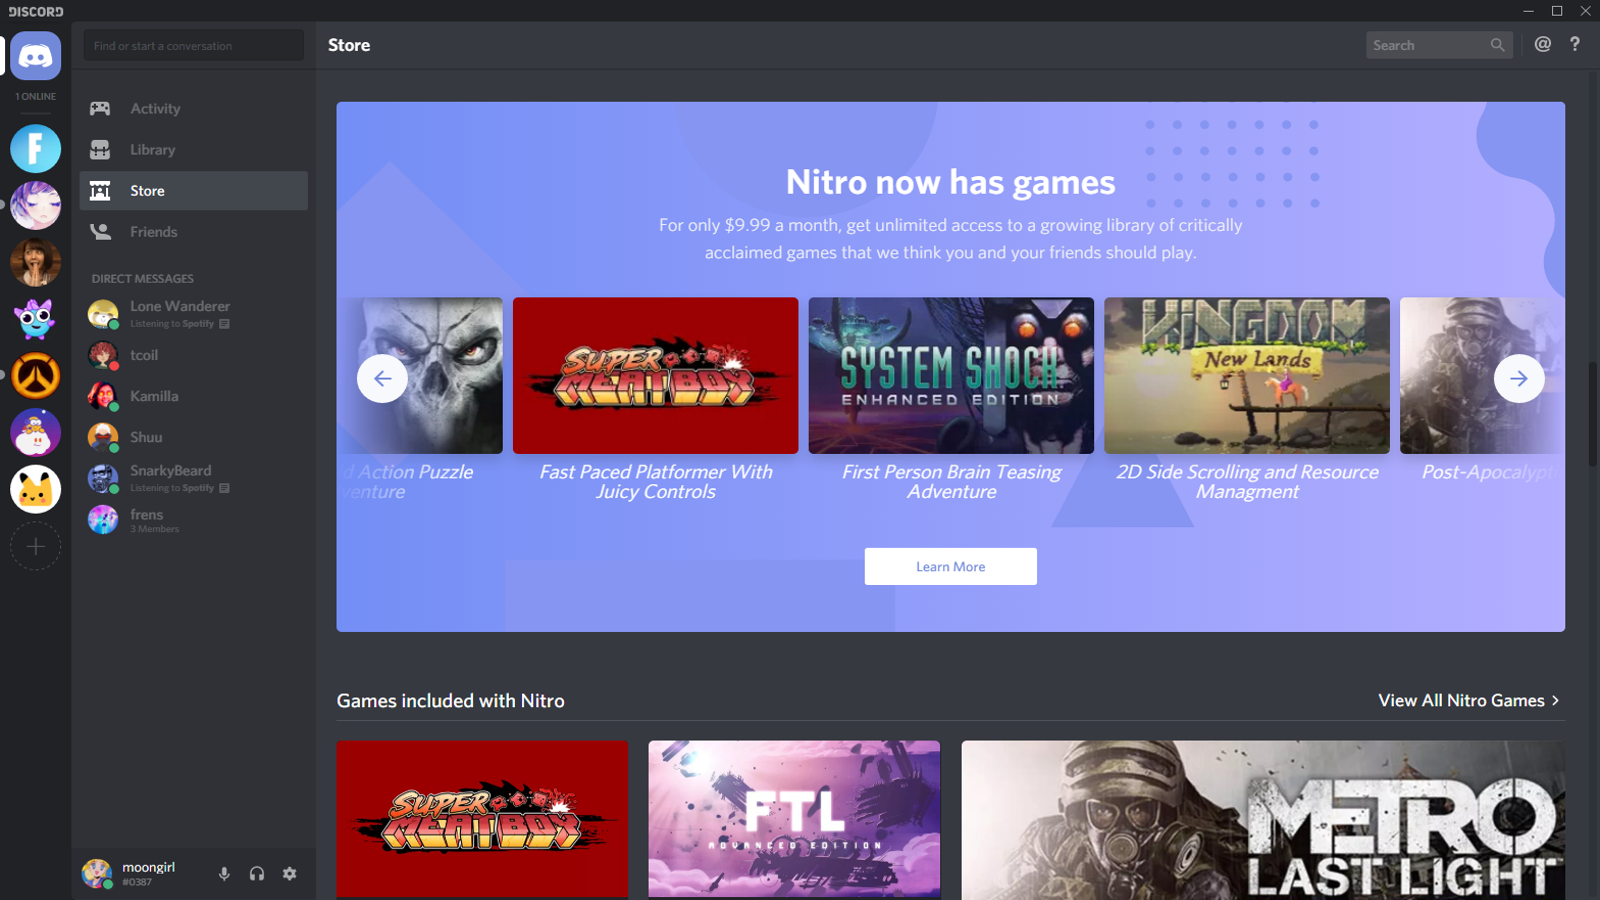 Discord drops Nitro Games catalog, citing lack of gamer interest - CNET